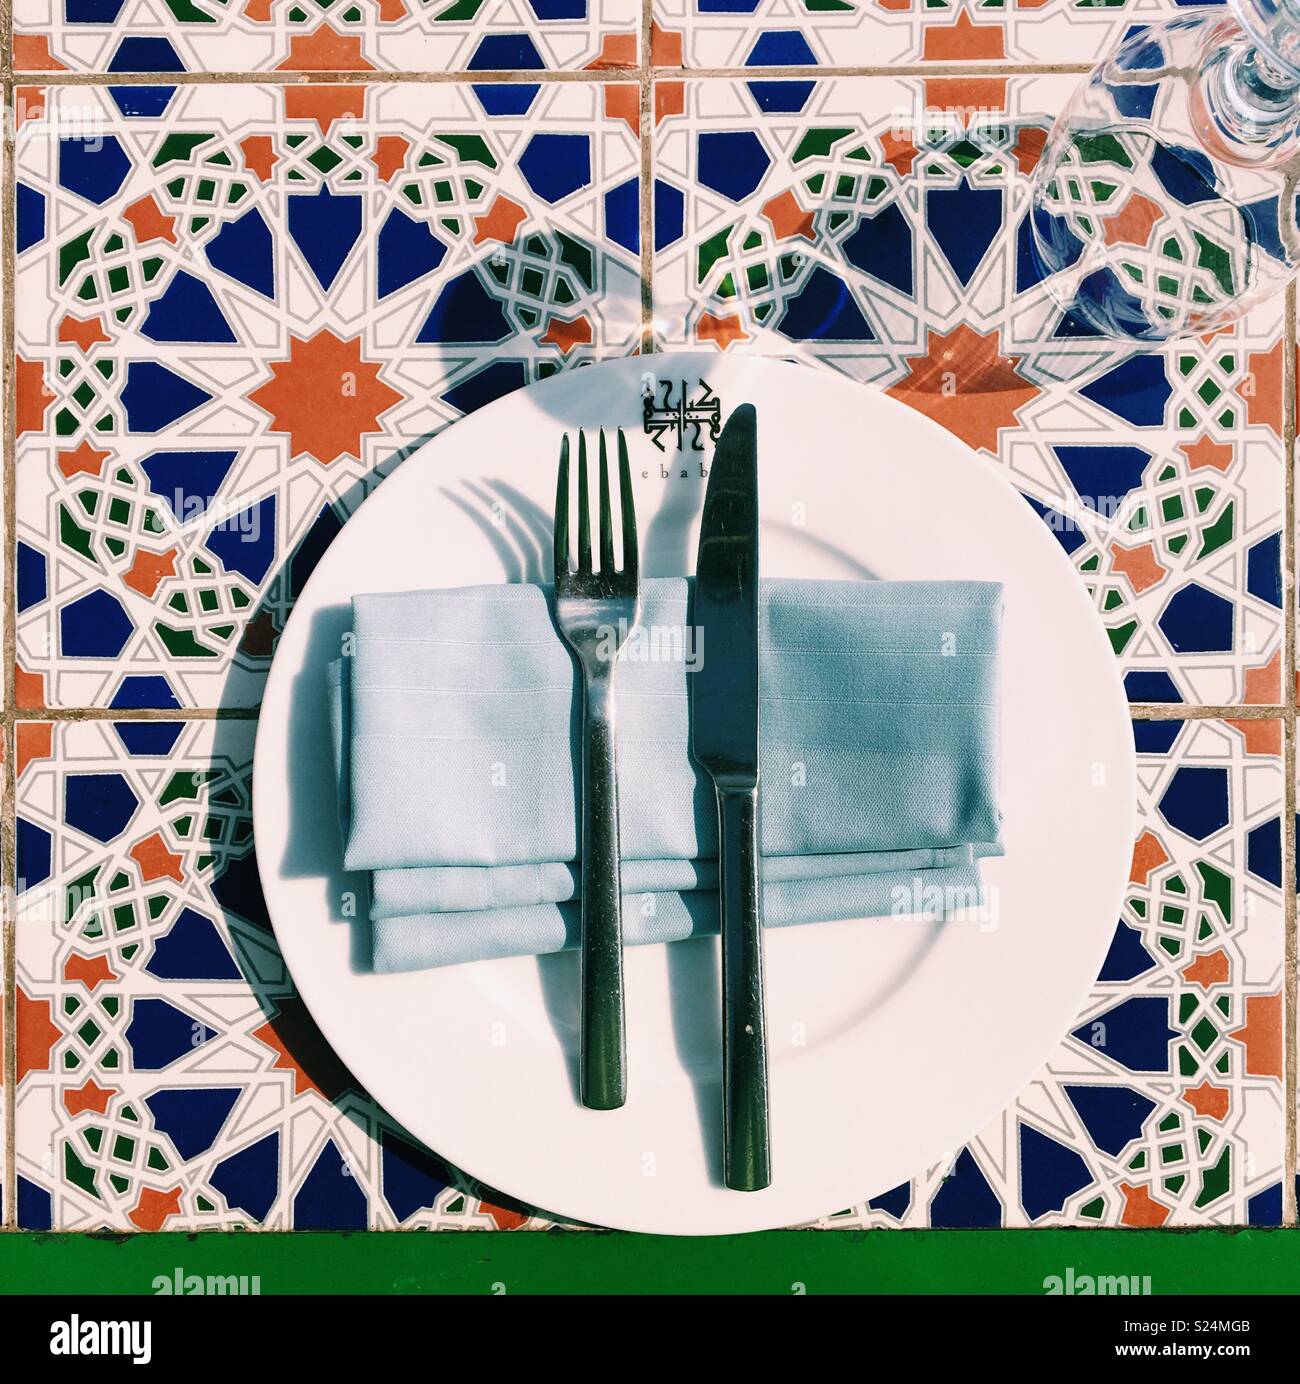 Cairo dining Stock Photo